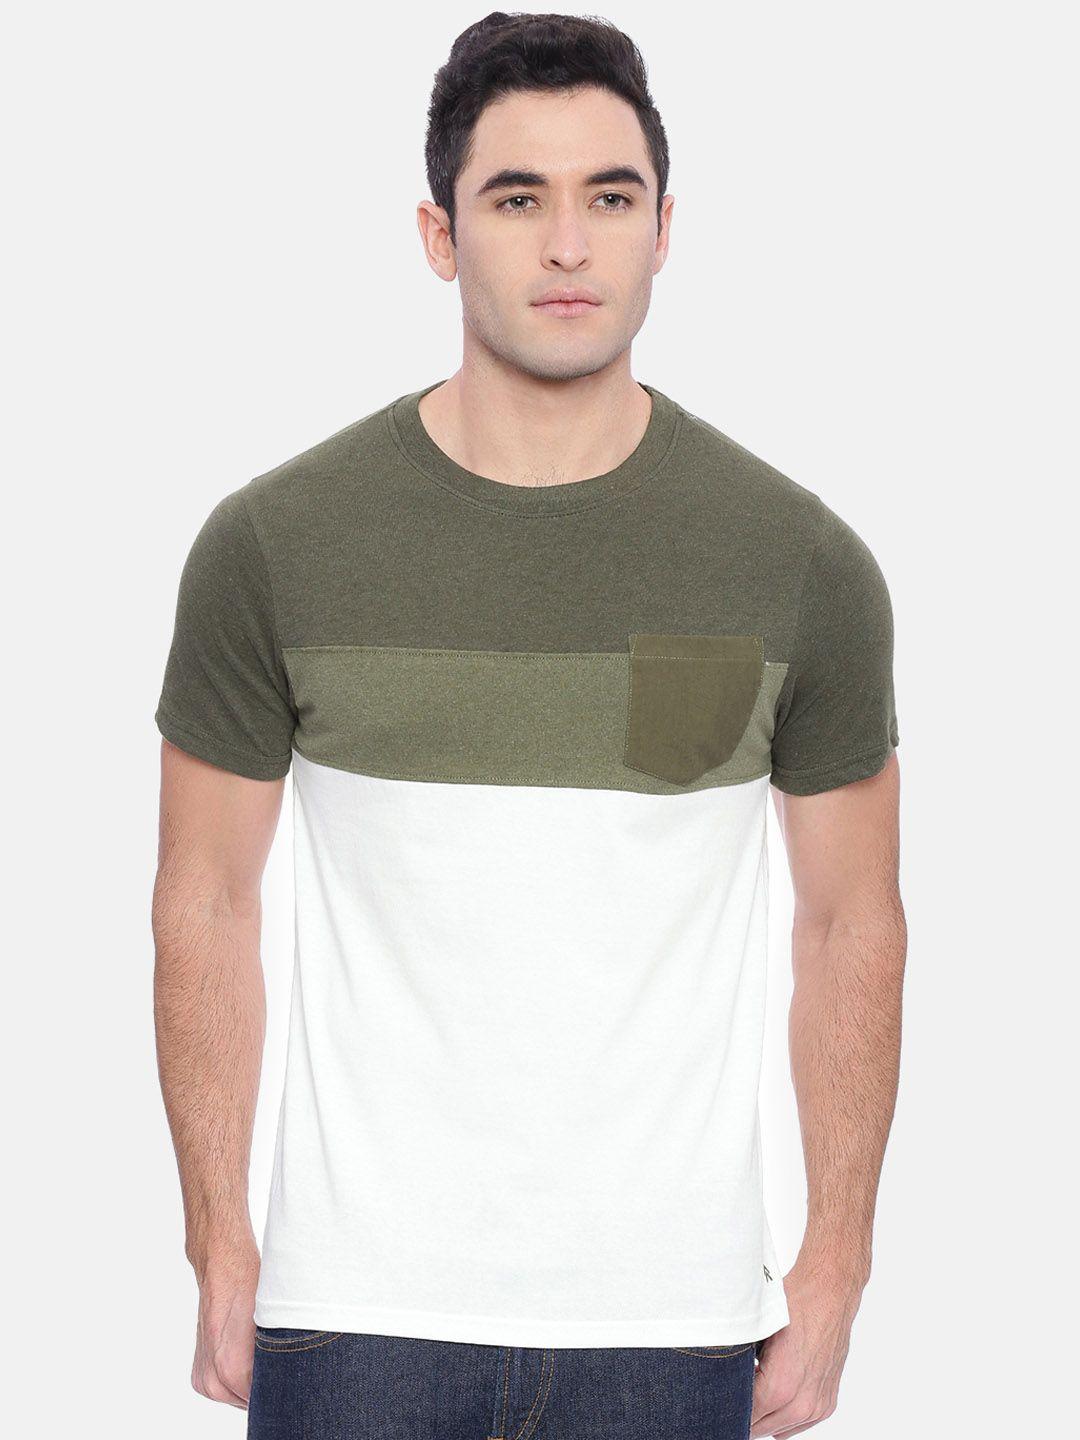 steenbok men olive green & white colourblocked round neck t-shirt